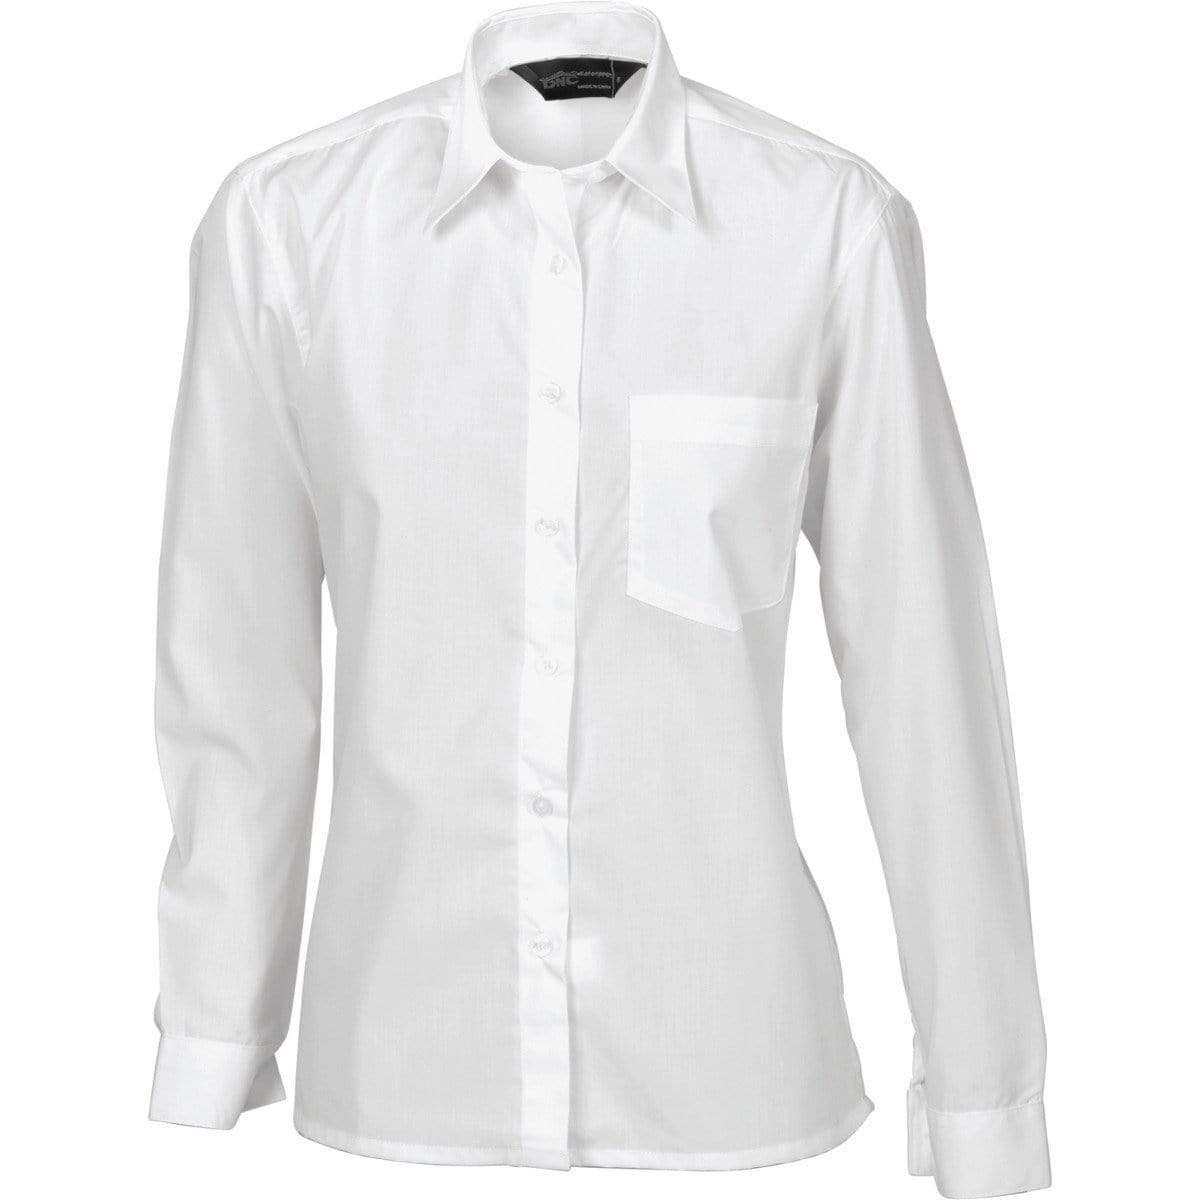 Dnc Workwear Ladies Polyester Cotton Long Sleeve Poplin Shirt - 4202 Corporate Wear DNC Workwear White 6 